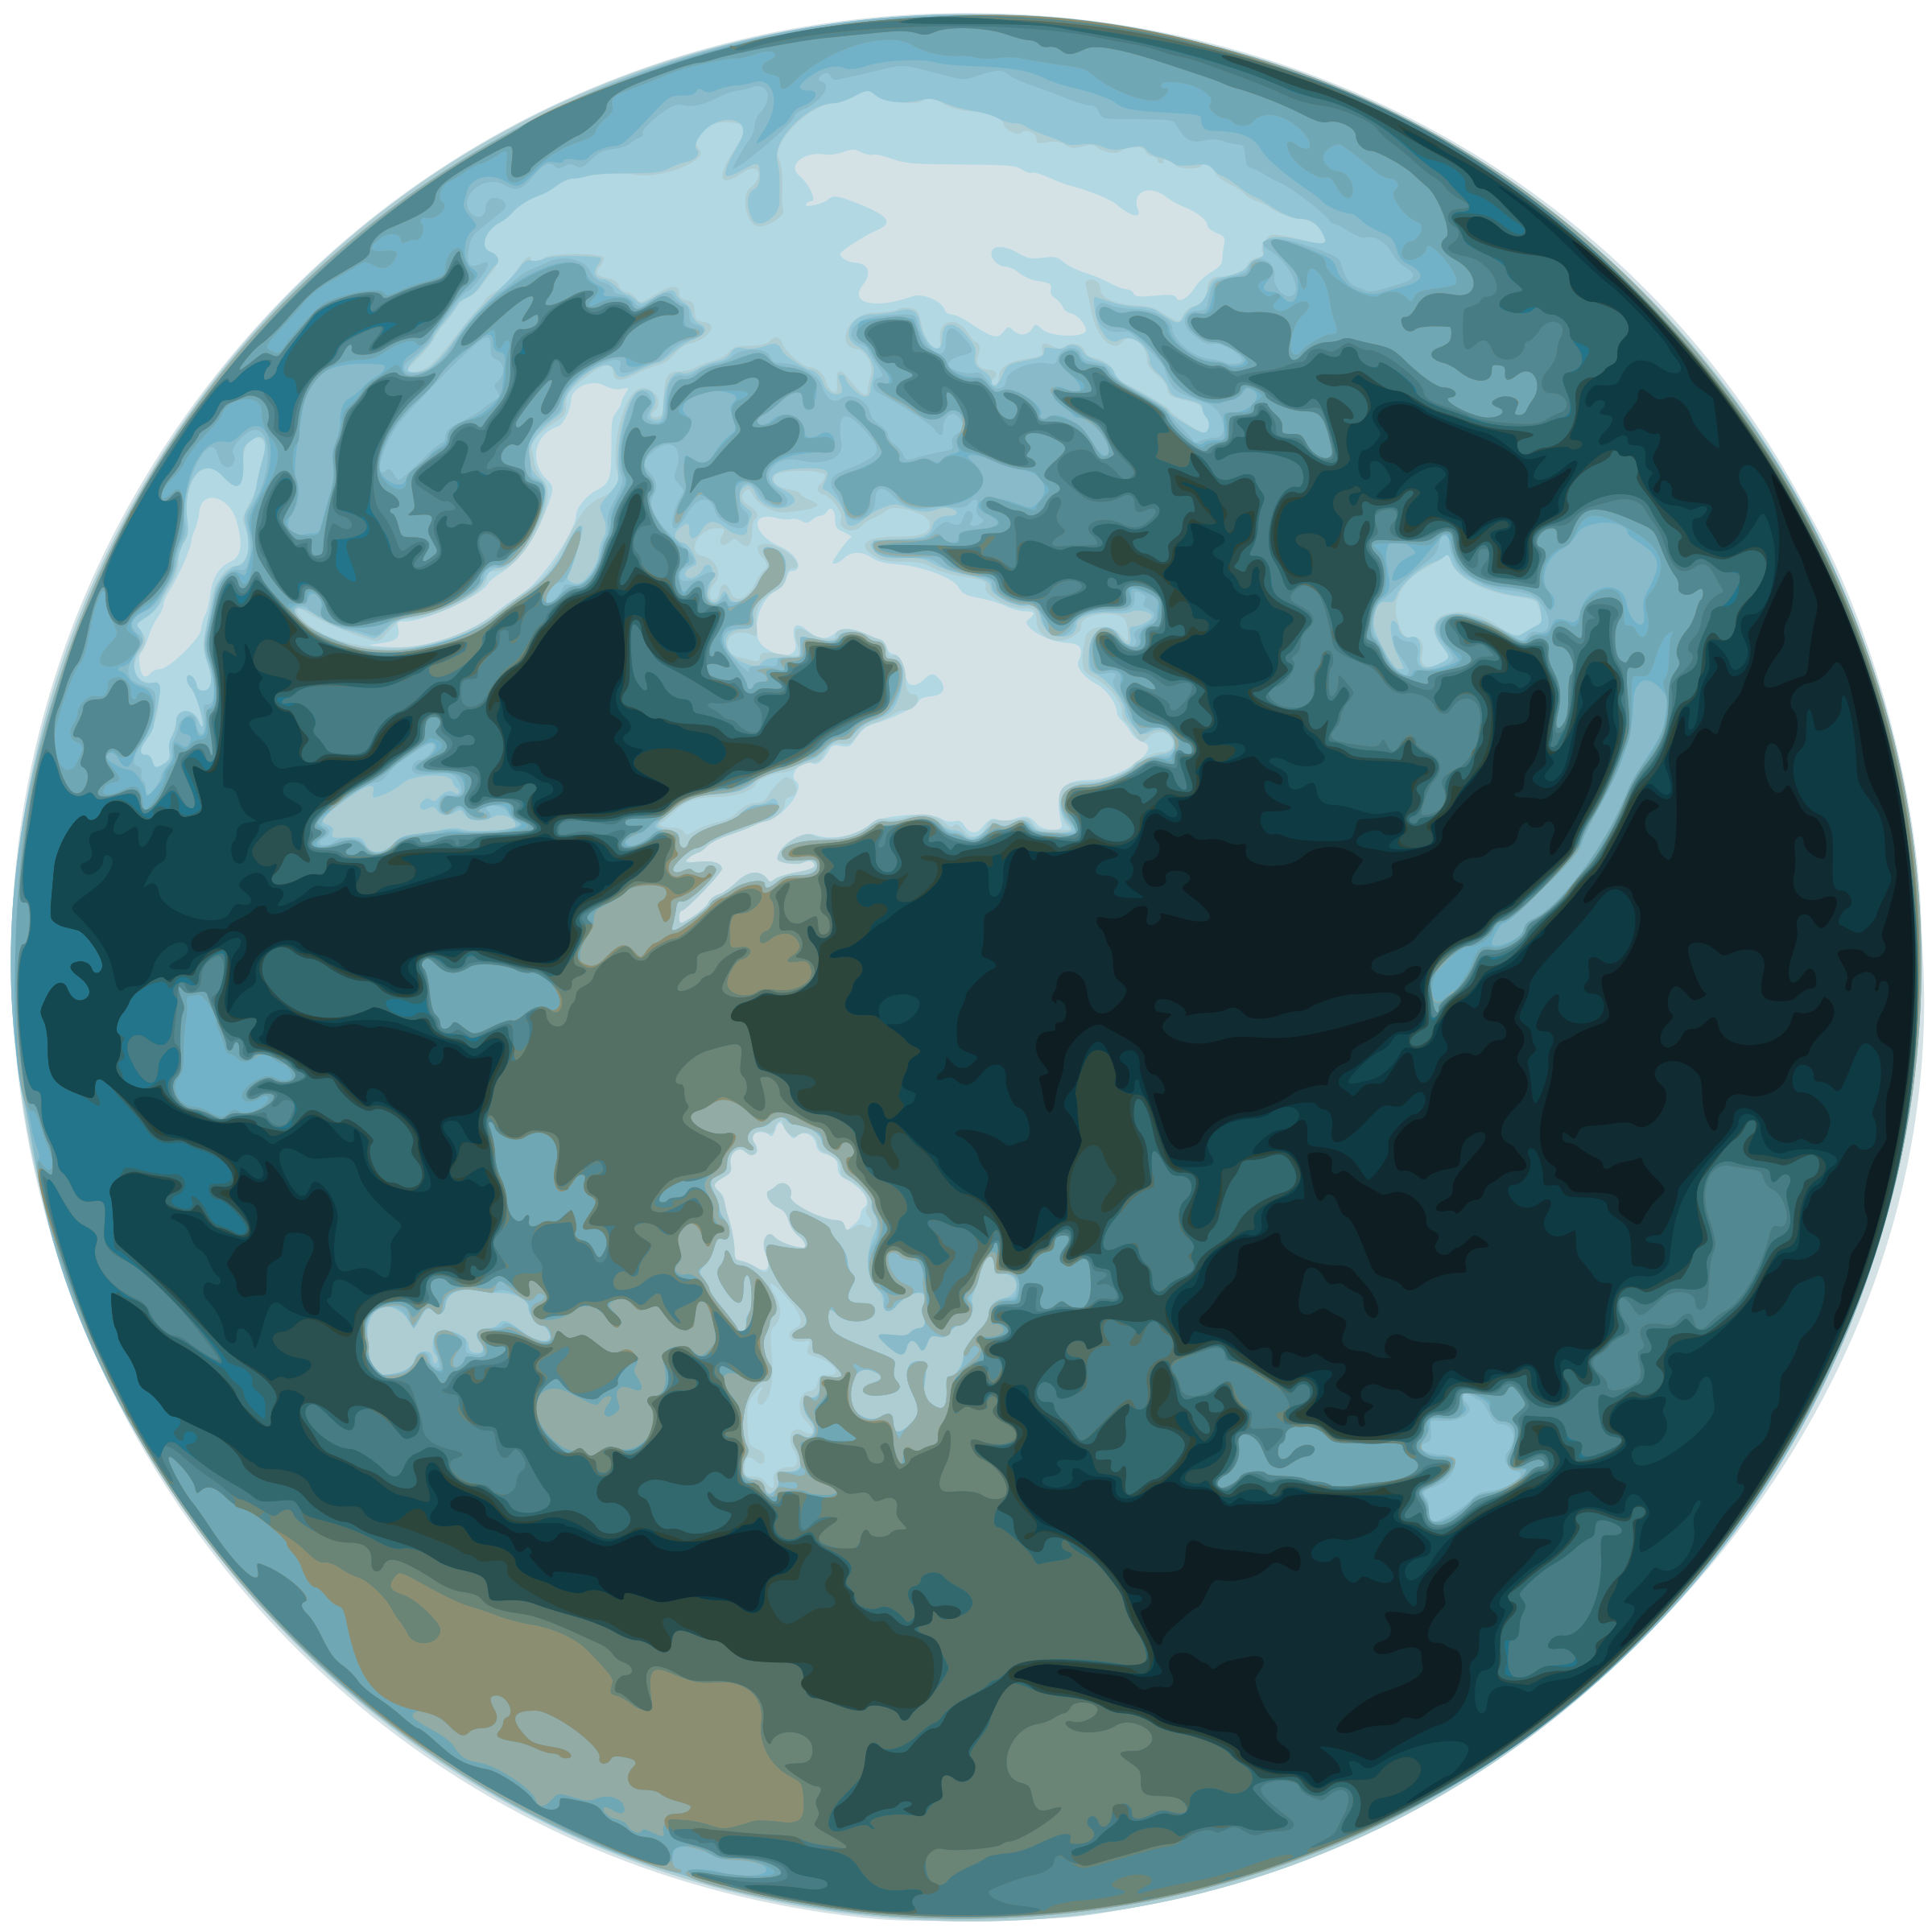 Earth Icon Vector Art image Free stock photo Public